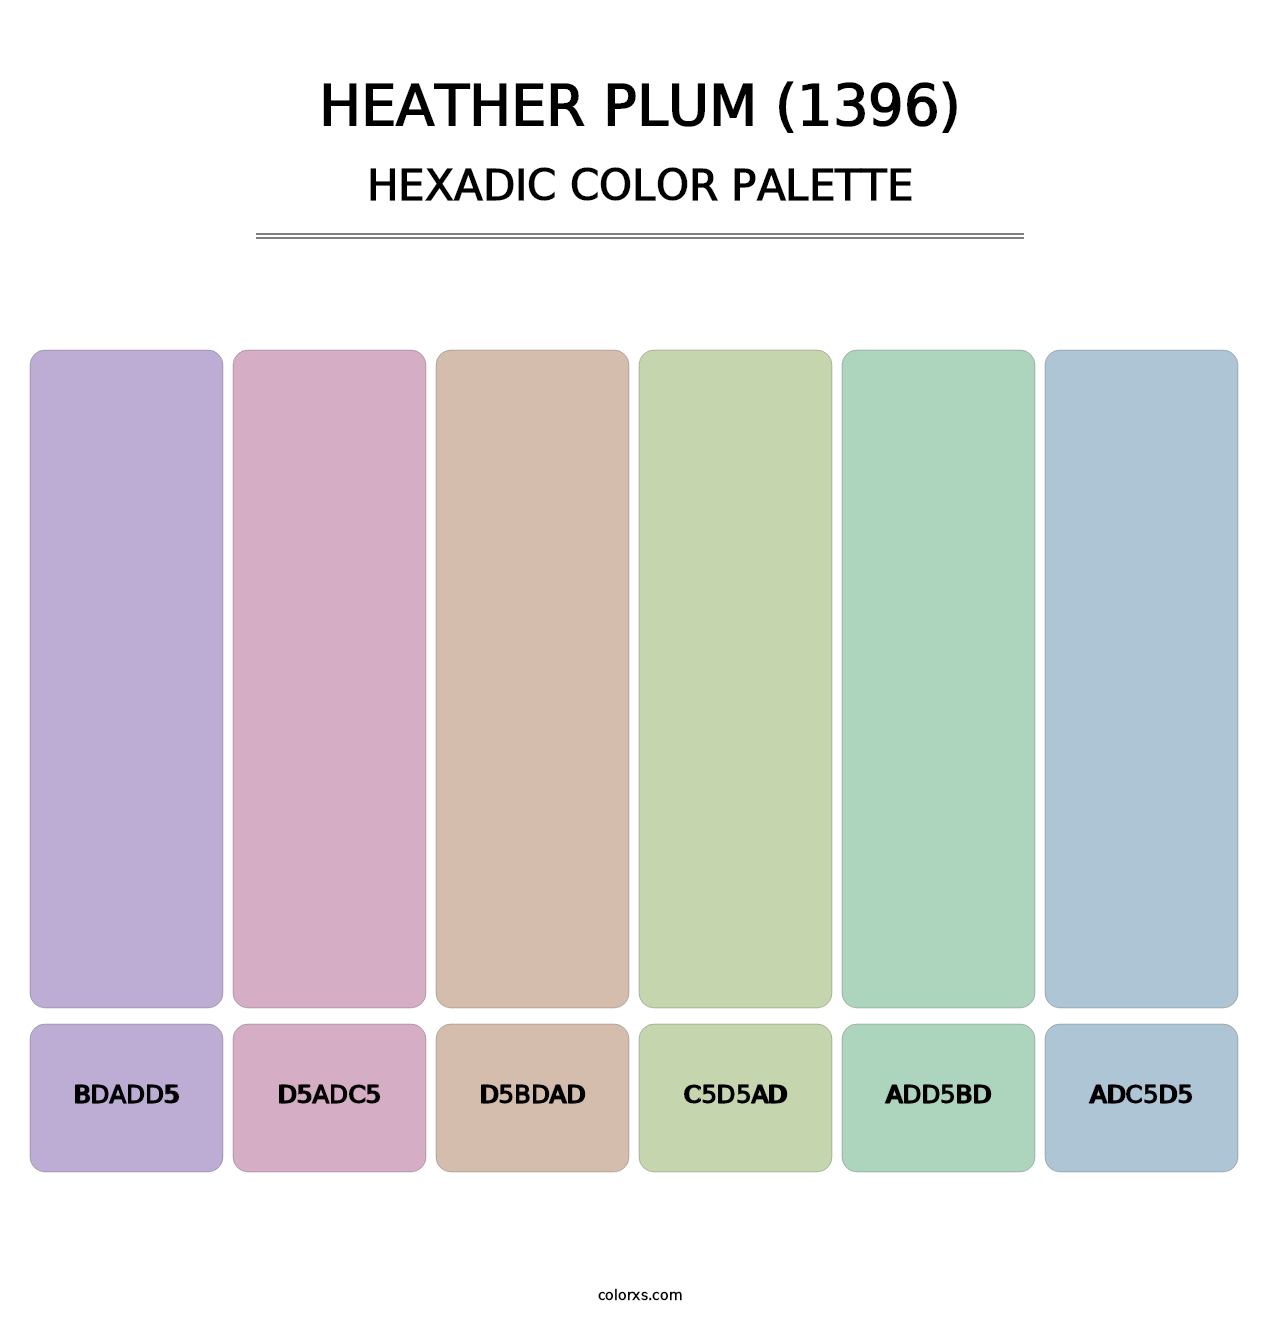 Heather Plum (1396) - Hexadic Color Palette